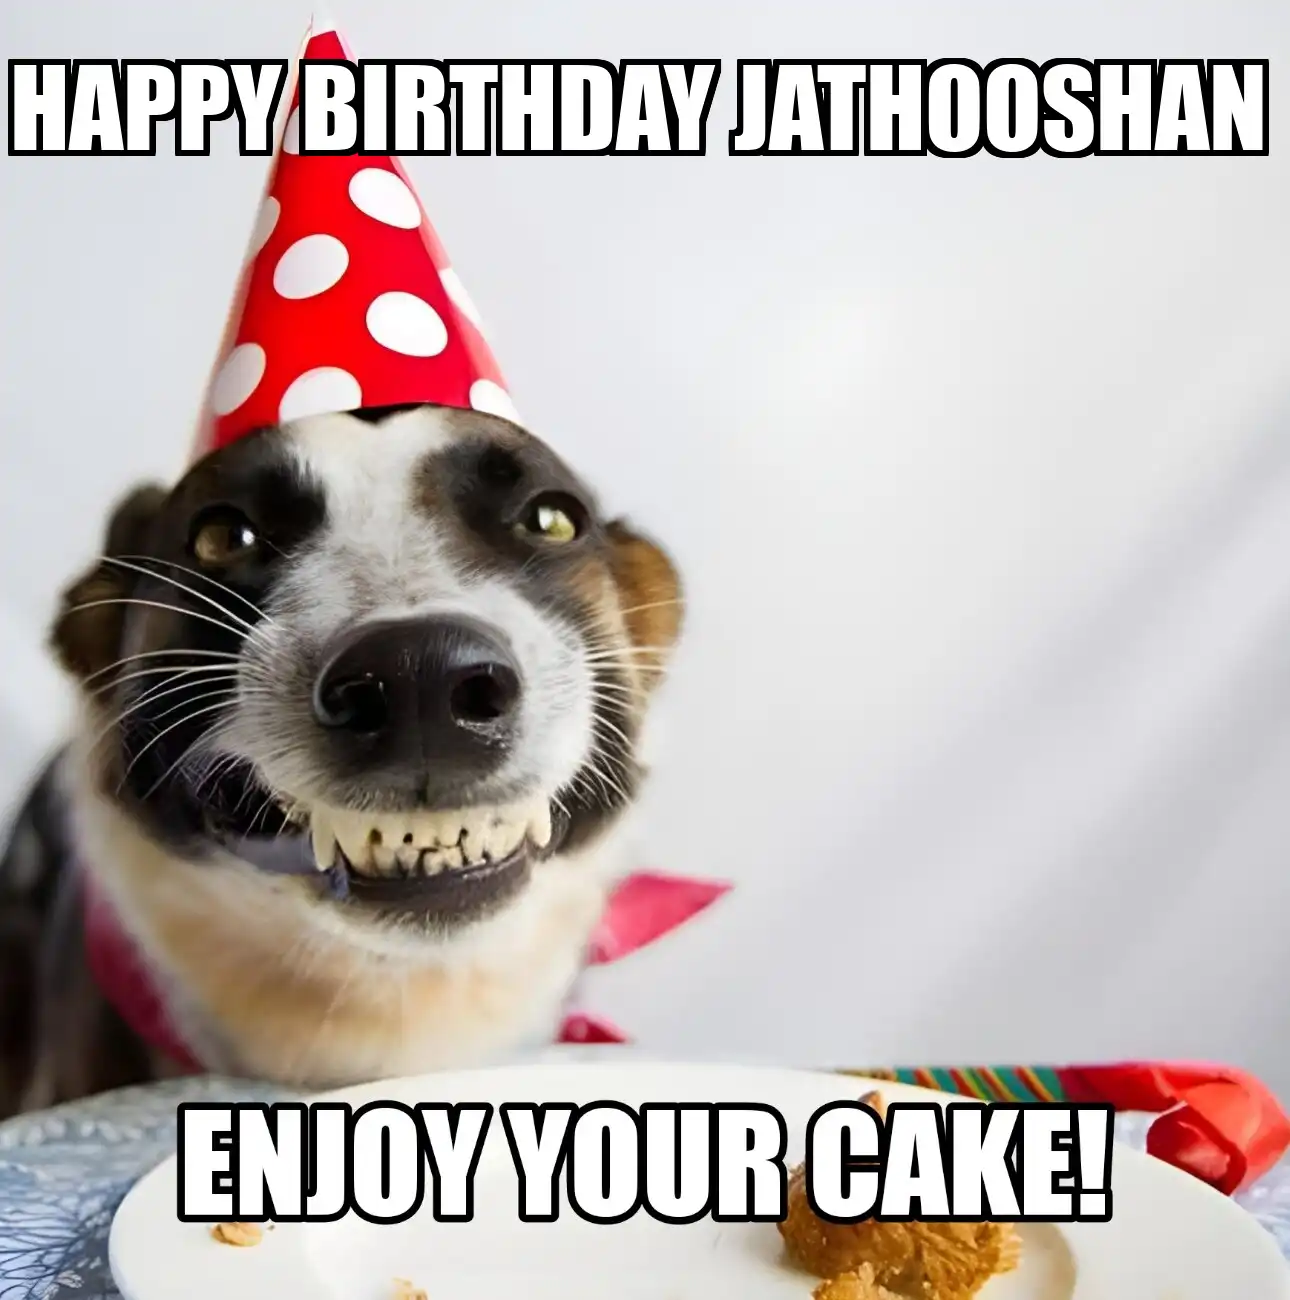 Happy Birthday Jathooshan Enjoy Your Cake Dog Meme